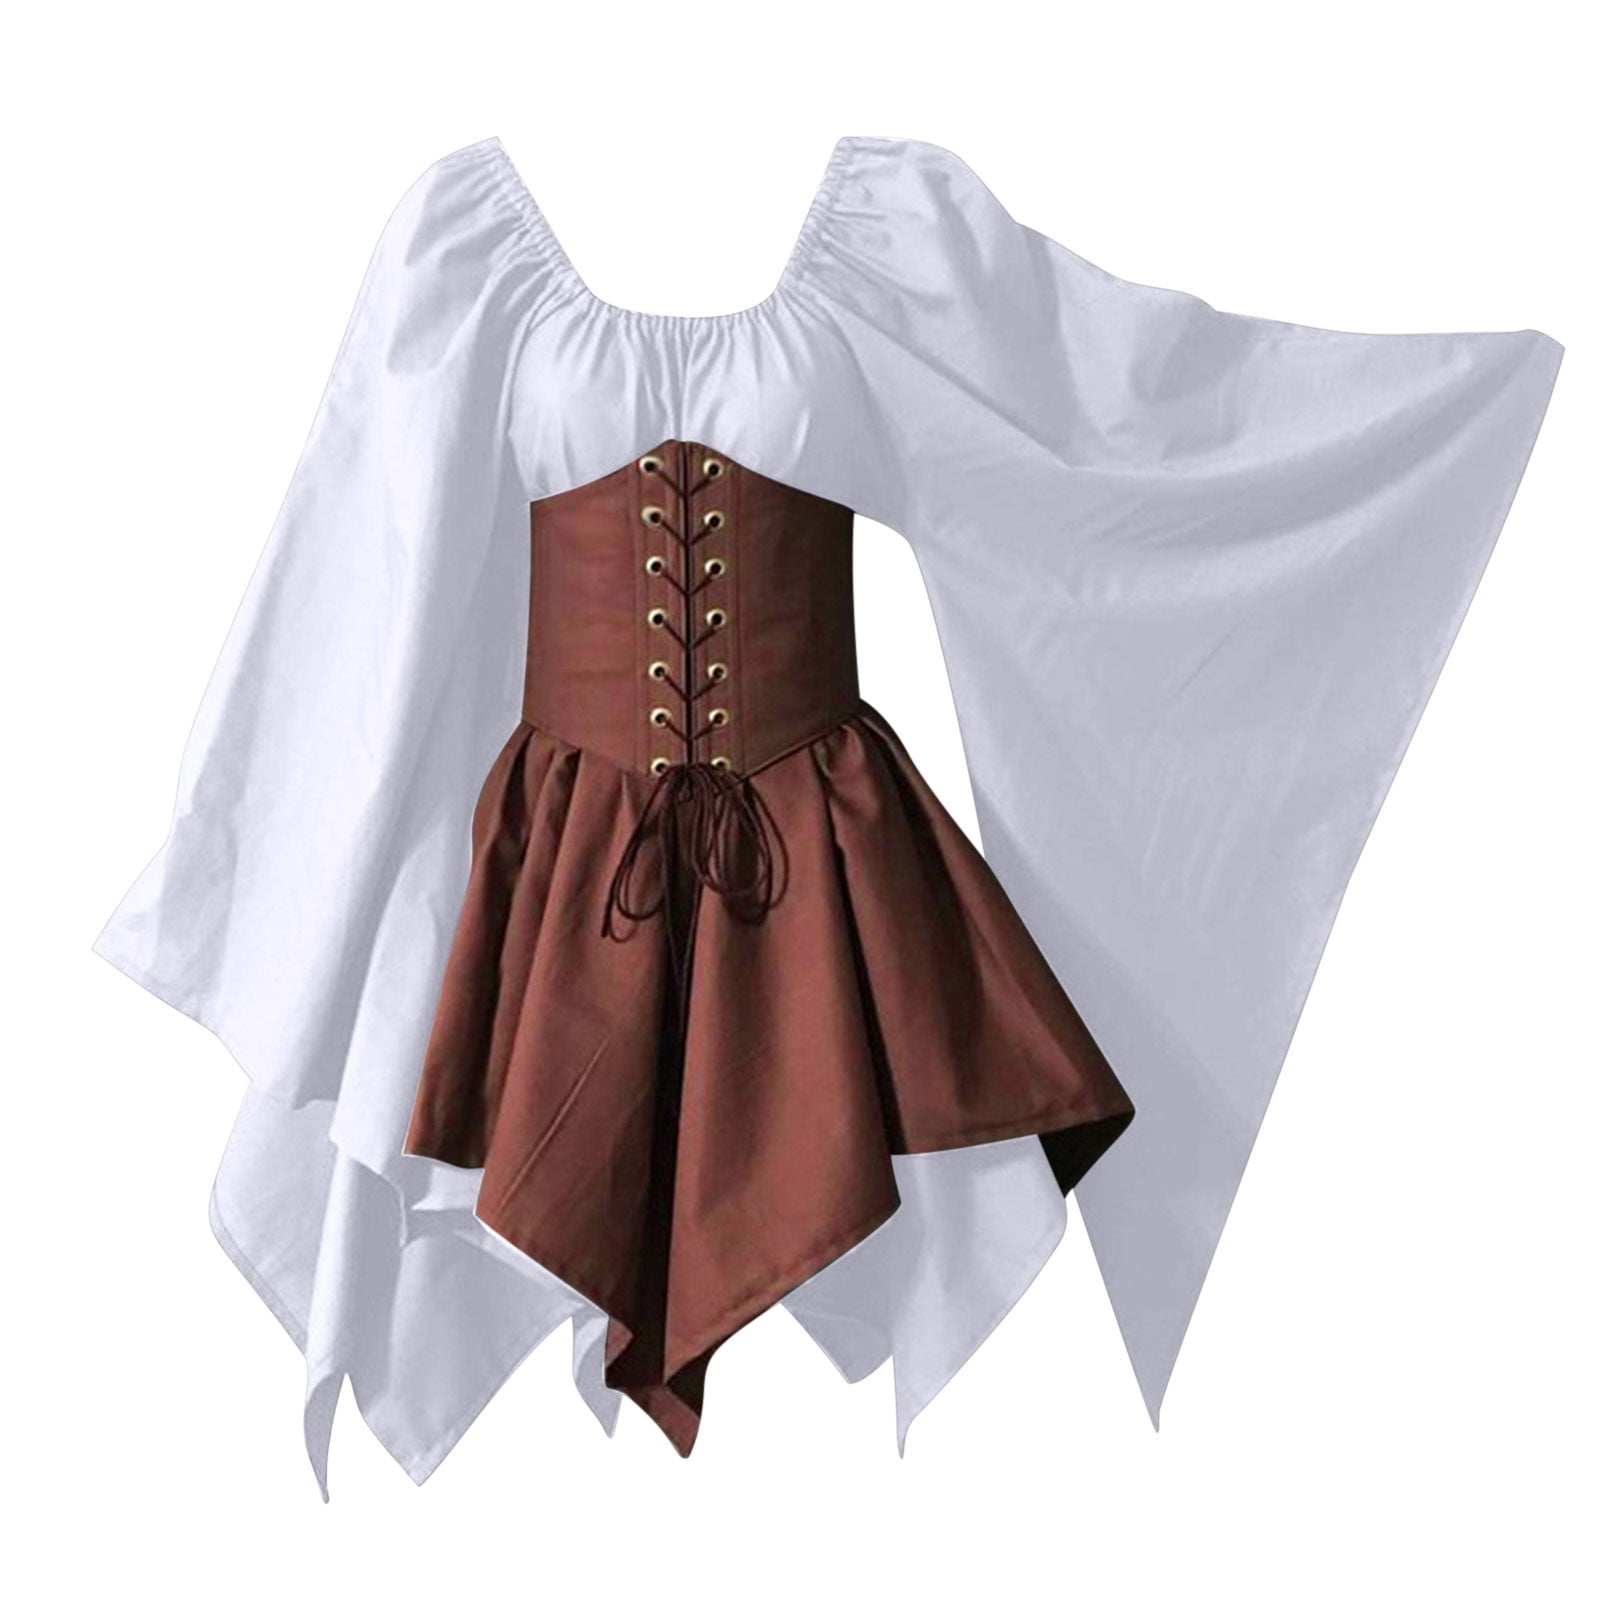 medieval dress costume